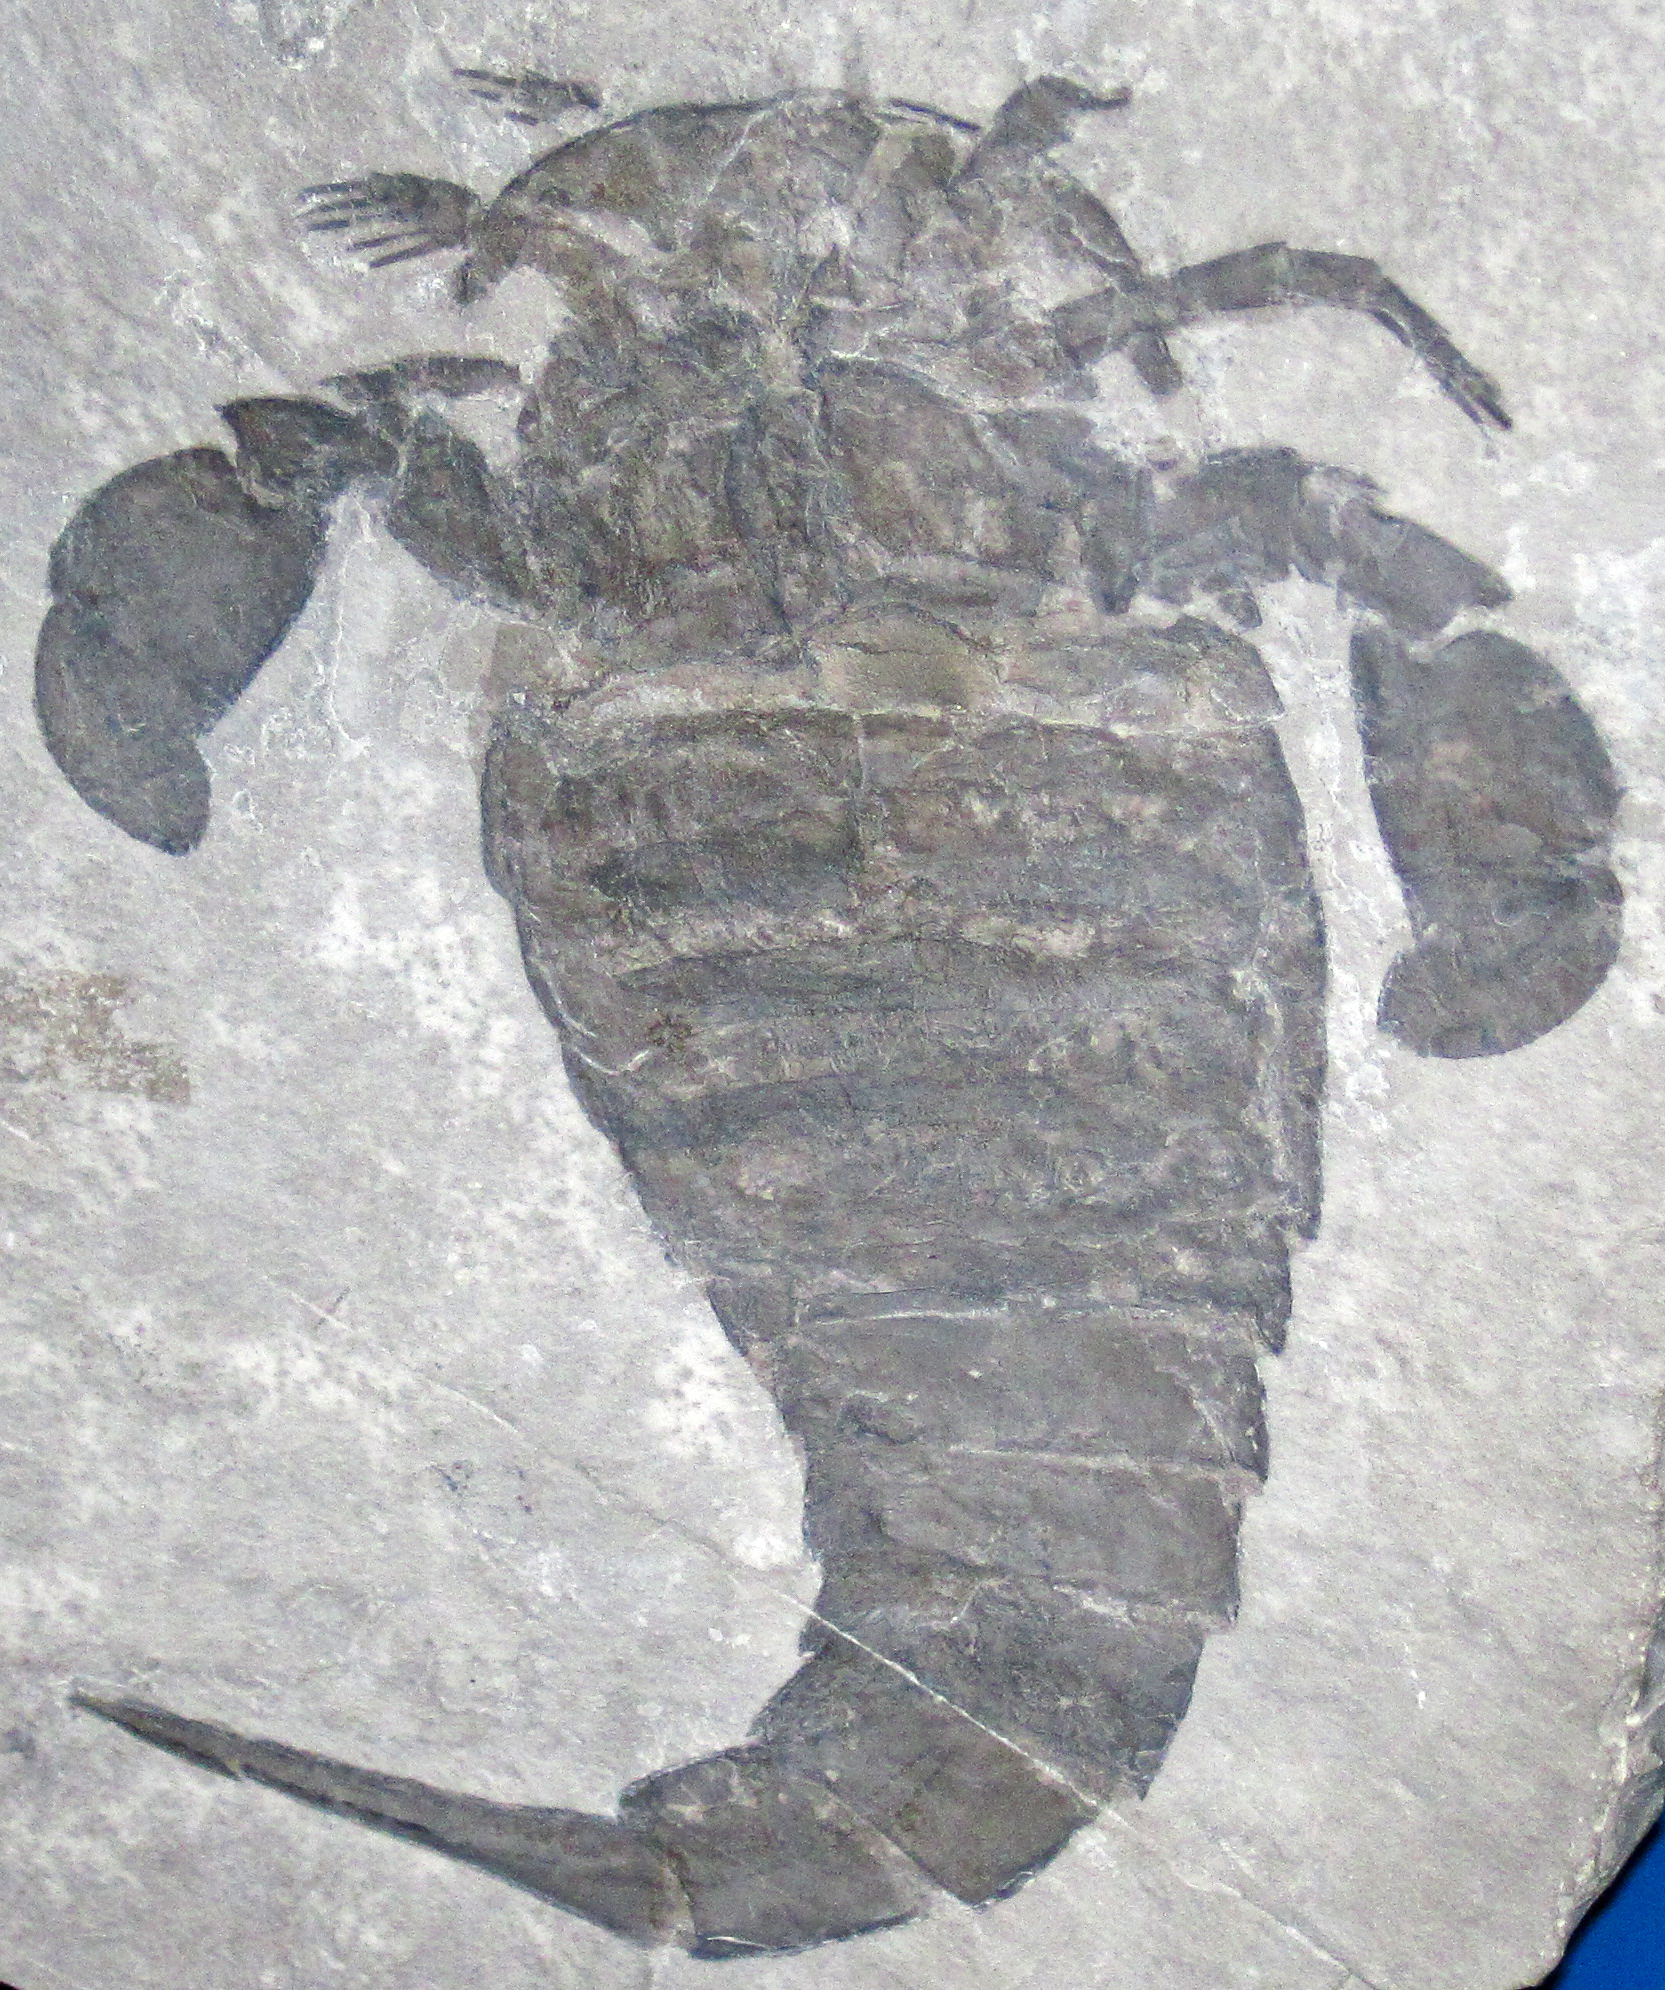 File:Eurypterus remipes (fossil sea scorption) Silurian; New York   - Wikimedia Commons